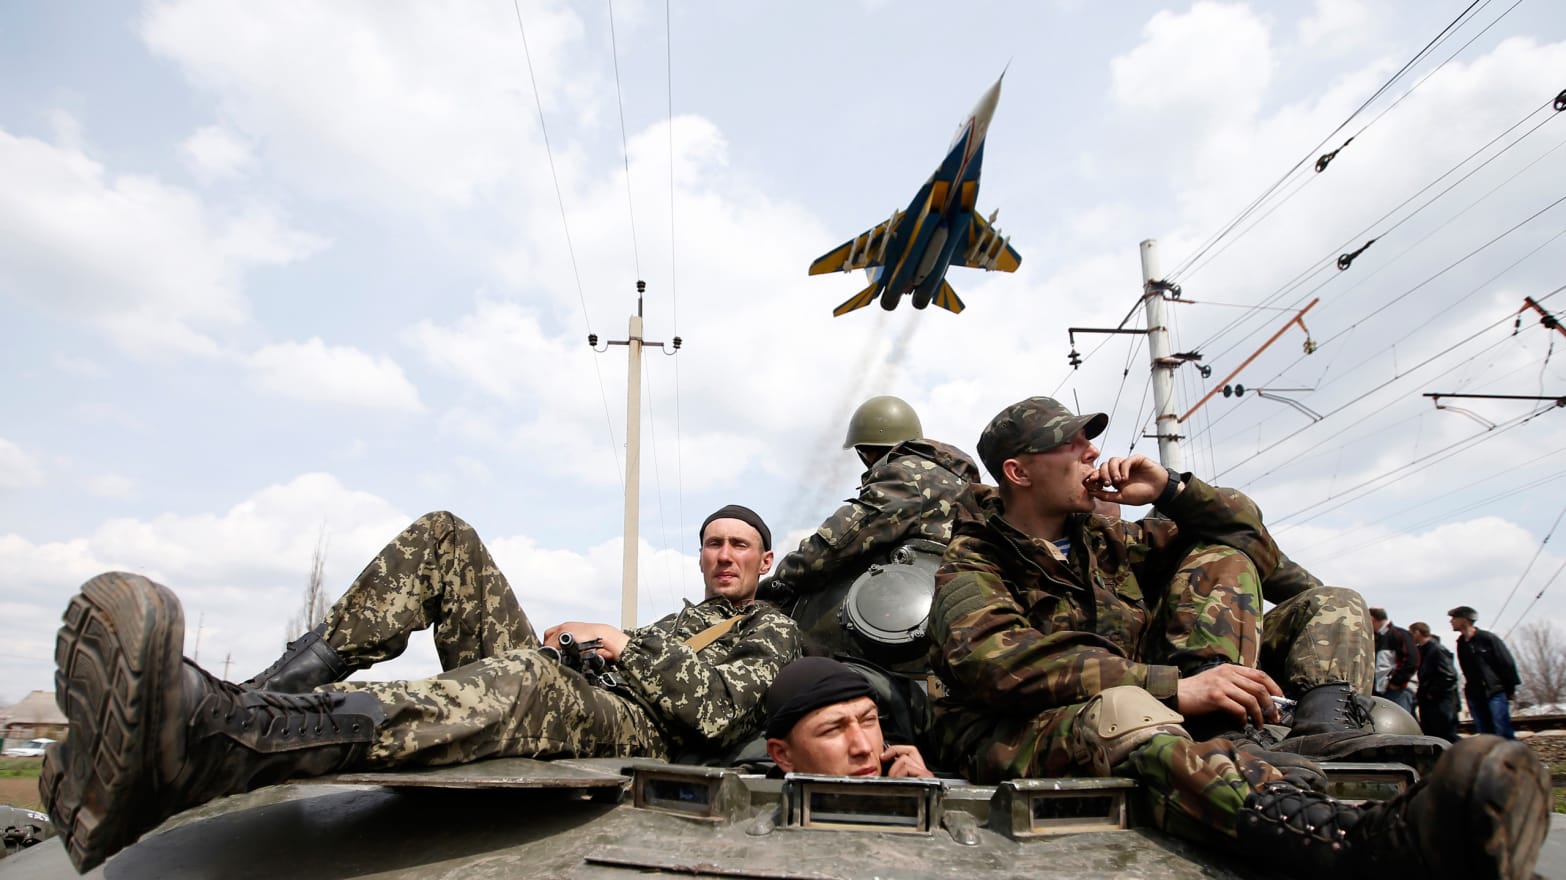 https://img.thedailybeast.com/image/upload/c_crop,d_placeholder_euli9k,h_1439,w_2560,x_0,y_0/dpr_1.5/c_limit,w_1044/fl_lossy,q_auto/v1492200510/articles/2014/04/17/the-ukrainian-army-is-crumbling-before-putin/140417-dettmer-ukraine2-tease_vaopxk